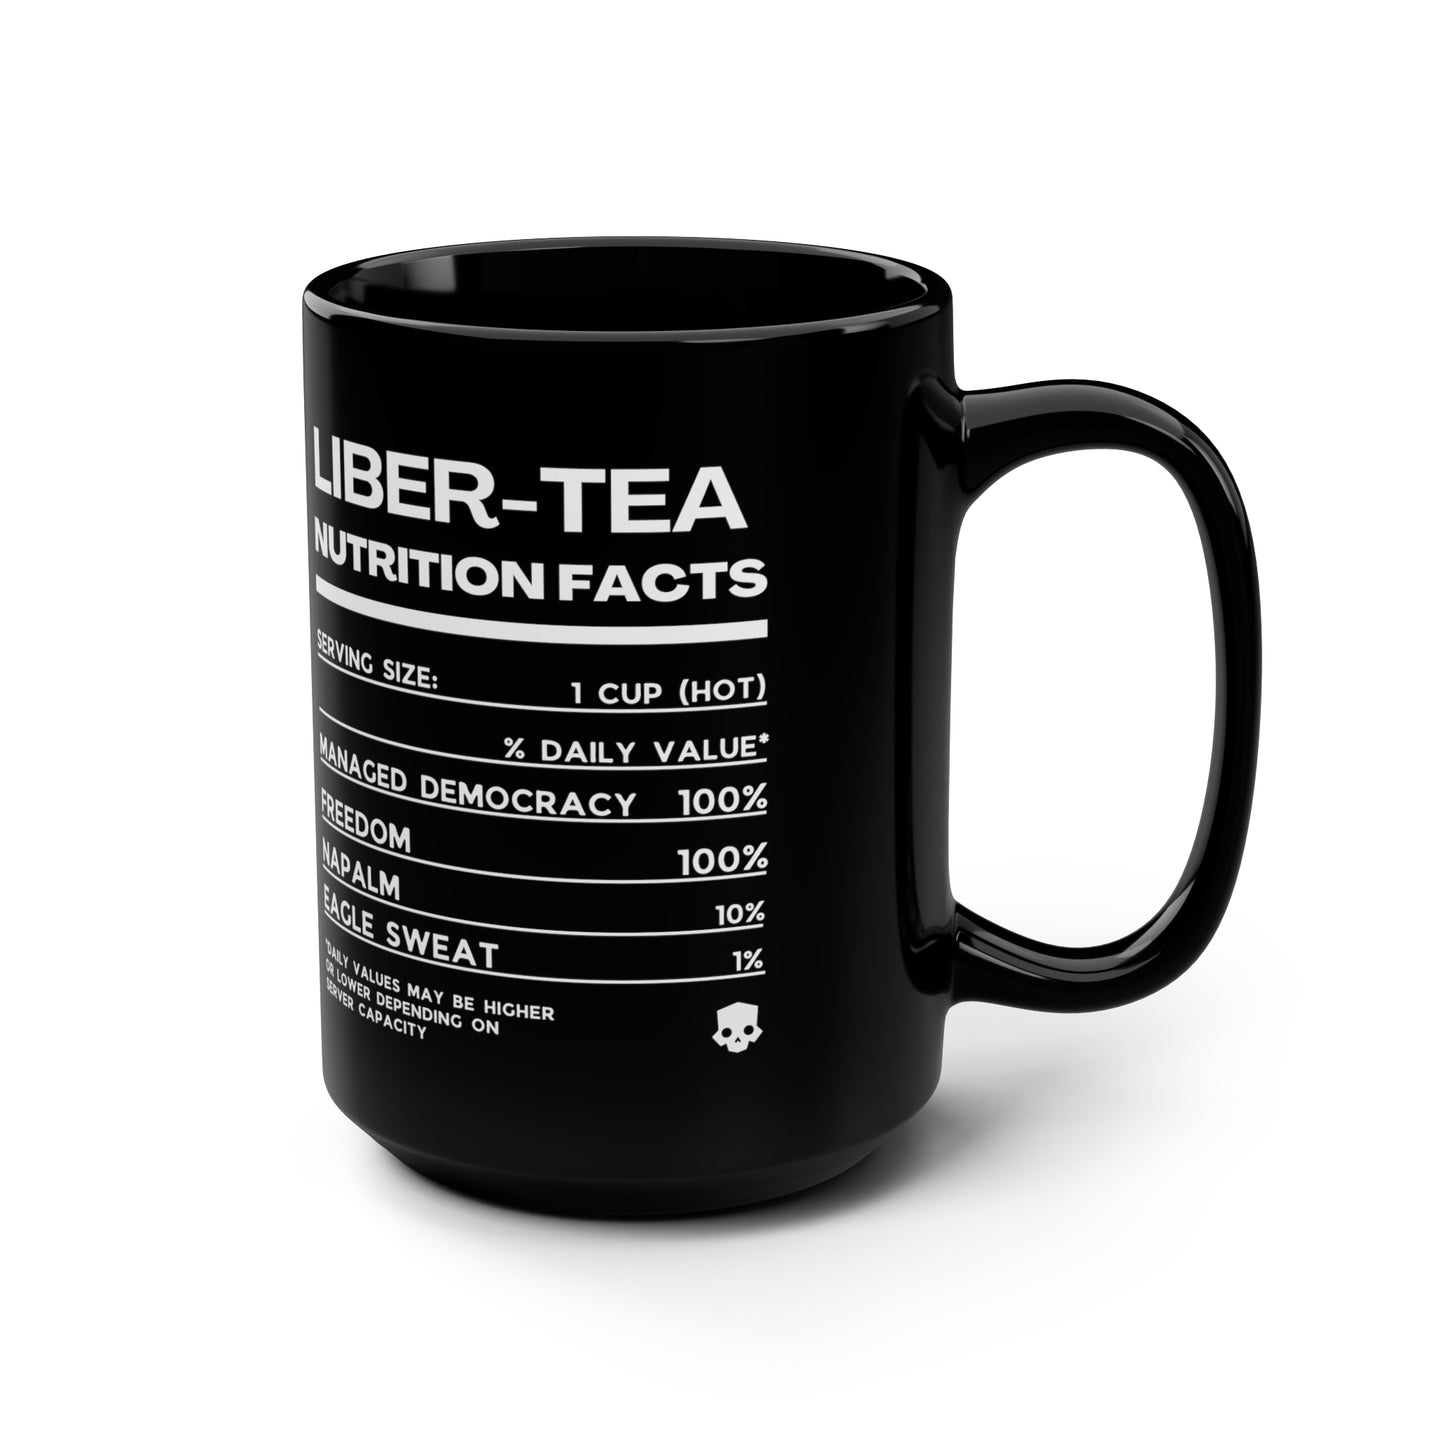 Helldivers 2 Inspired Glossy Black "Liber-Tea Nutrition Facts" Mug